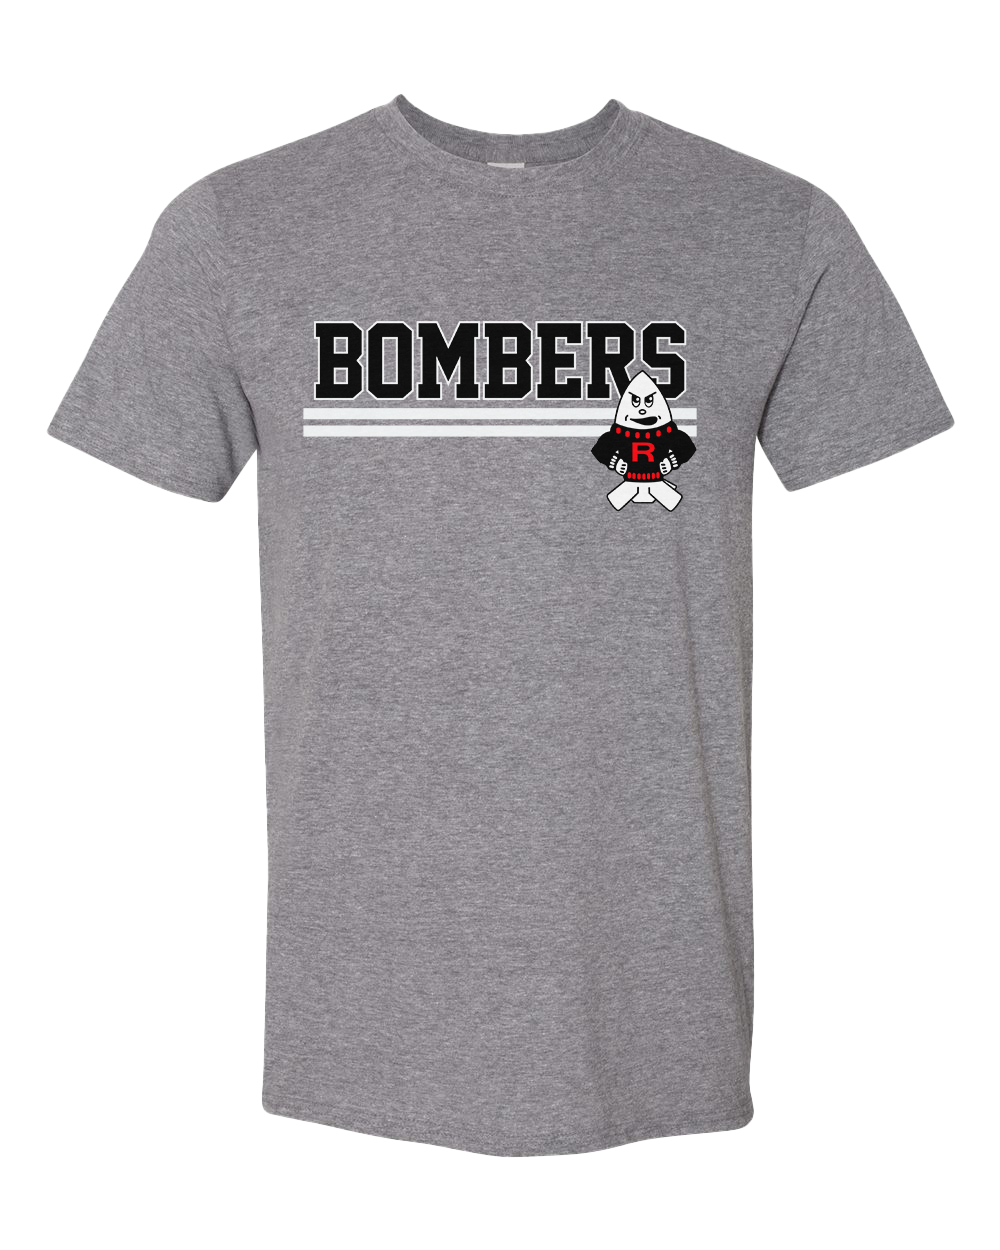 Rensselaer Central Bombers Retro Tshirt - Graphite Heather